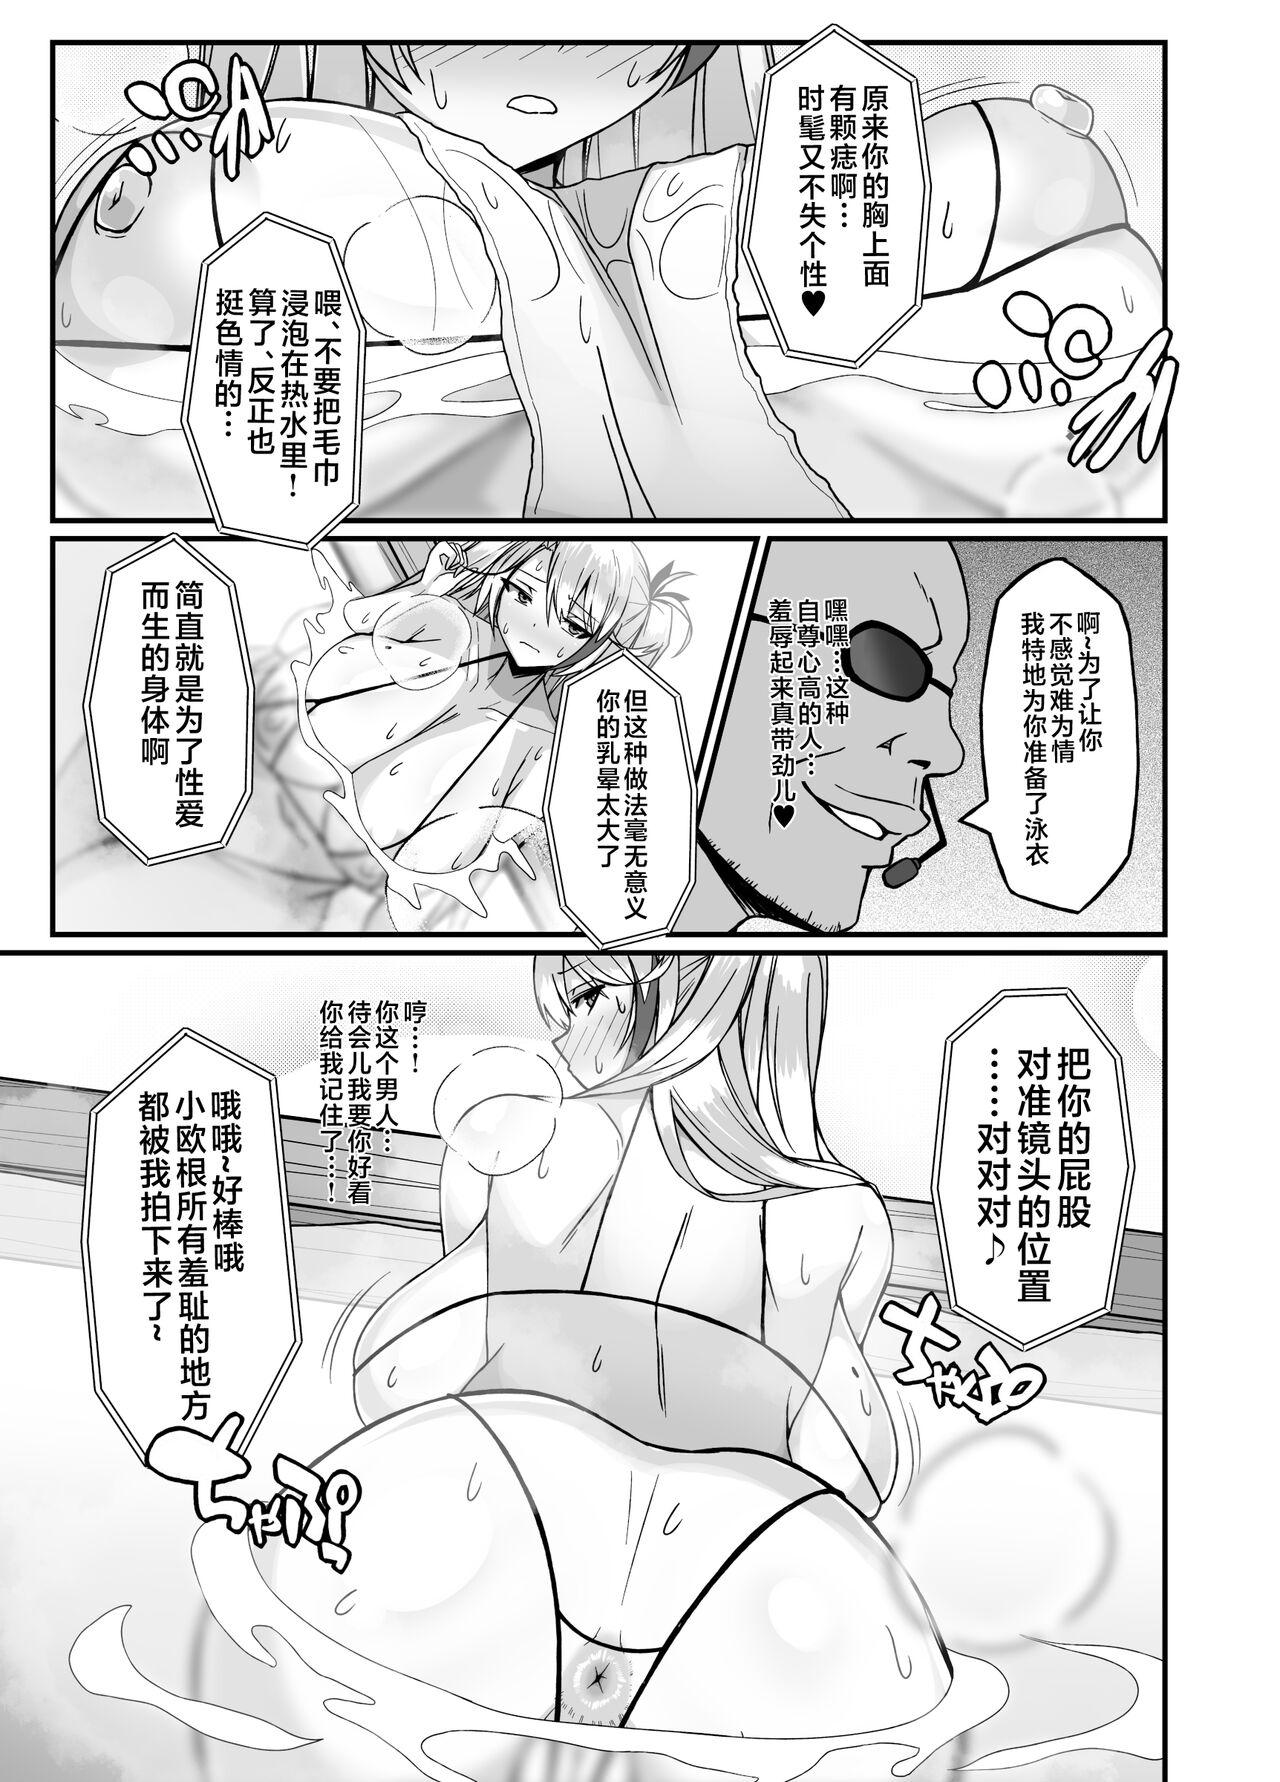 Por プリンツ・オイゲン男湯潜入チャレンジ - Azur lane Nasty - Page 5